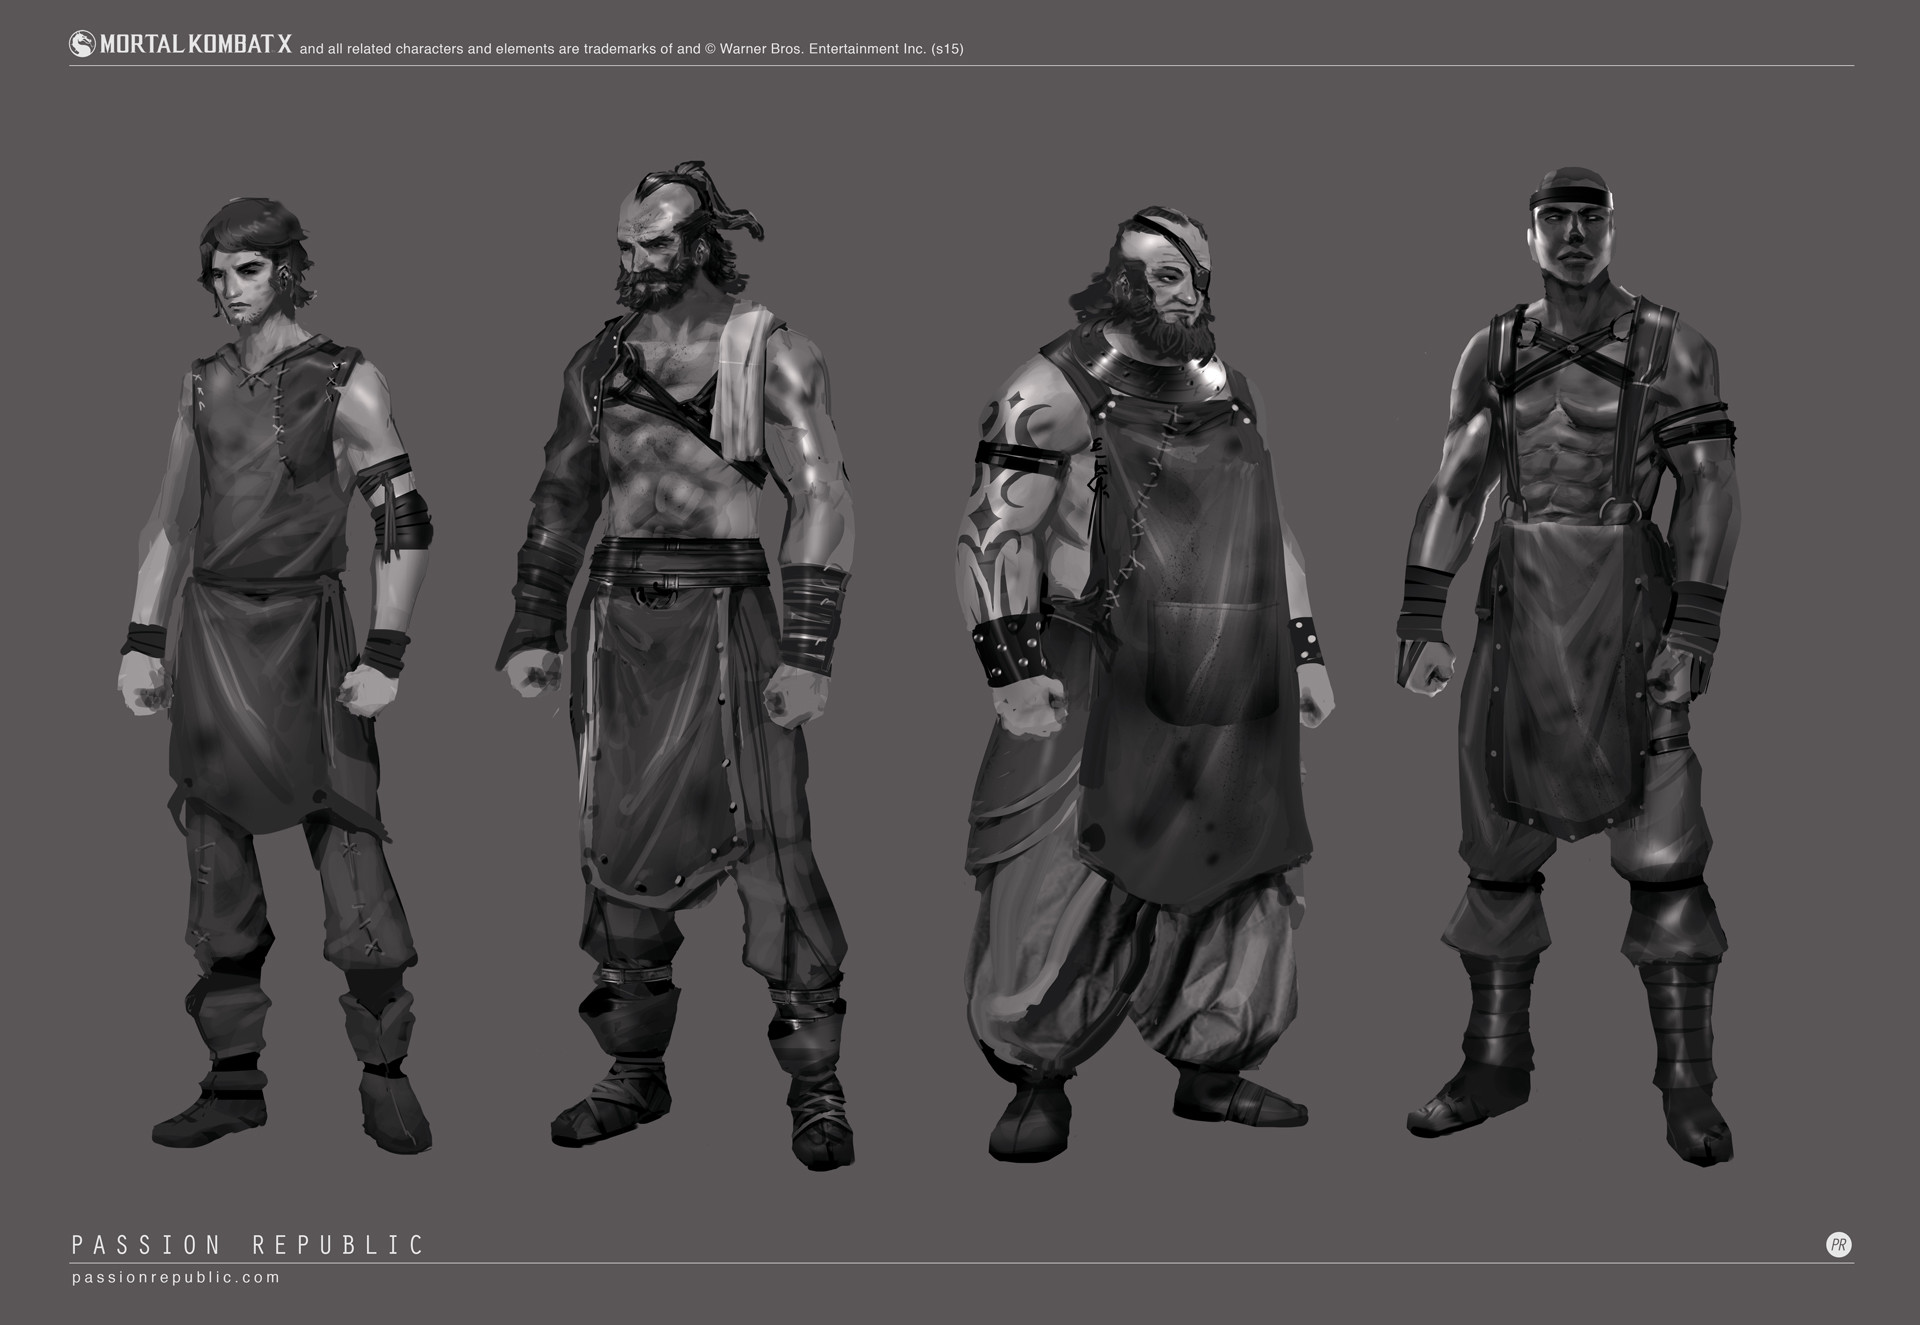 ArtStation - Mortal Kombat X Character Concept Art, Passion Republic  Mortal  kombat x, Sub zero mortal kombat, Mortal kombat x characters